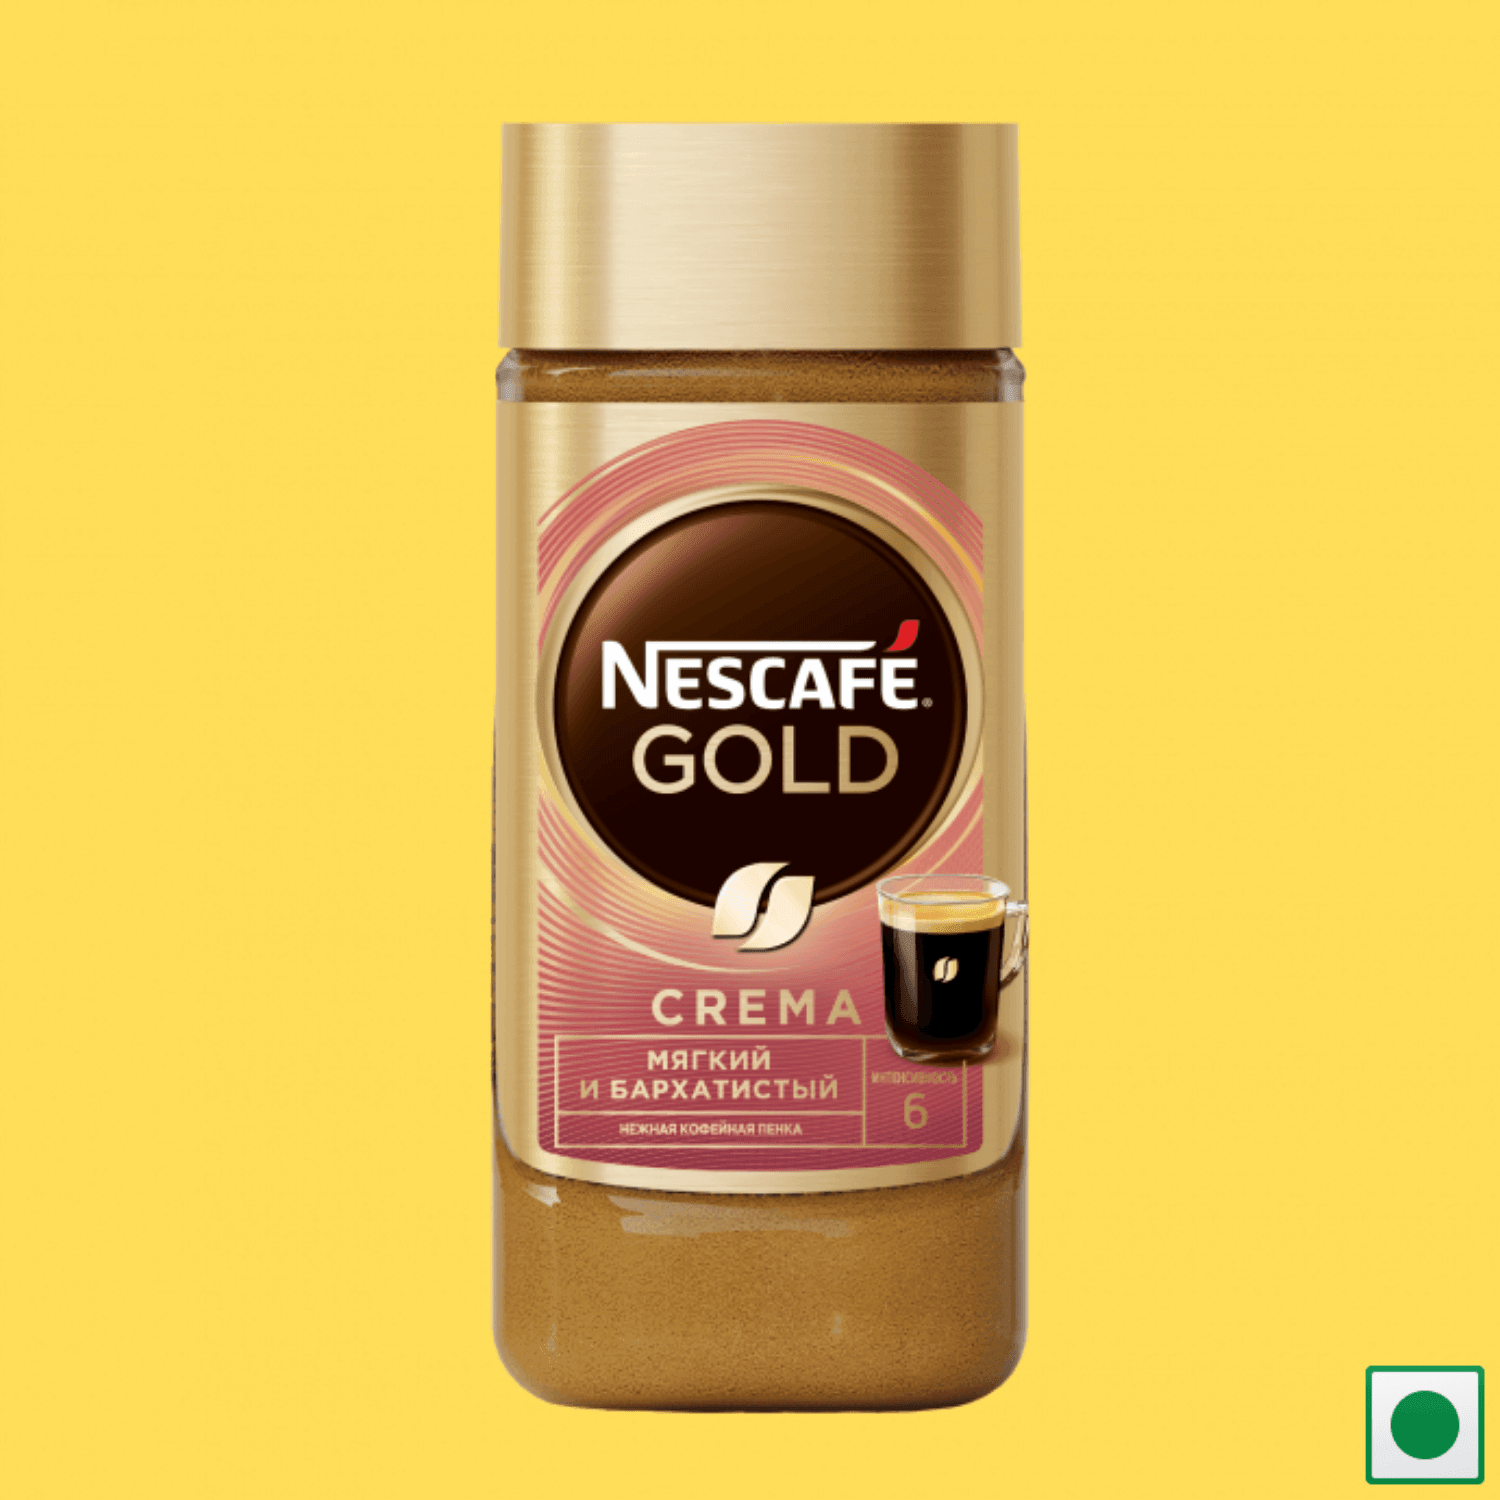 Nescafe Gold Crema, 95g (Imported)